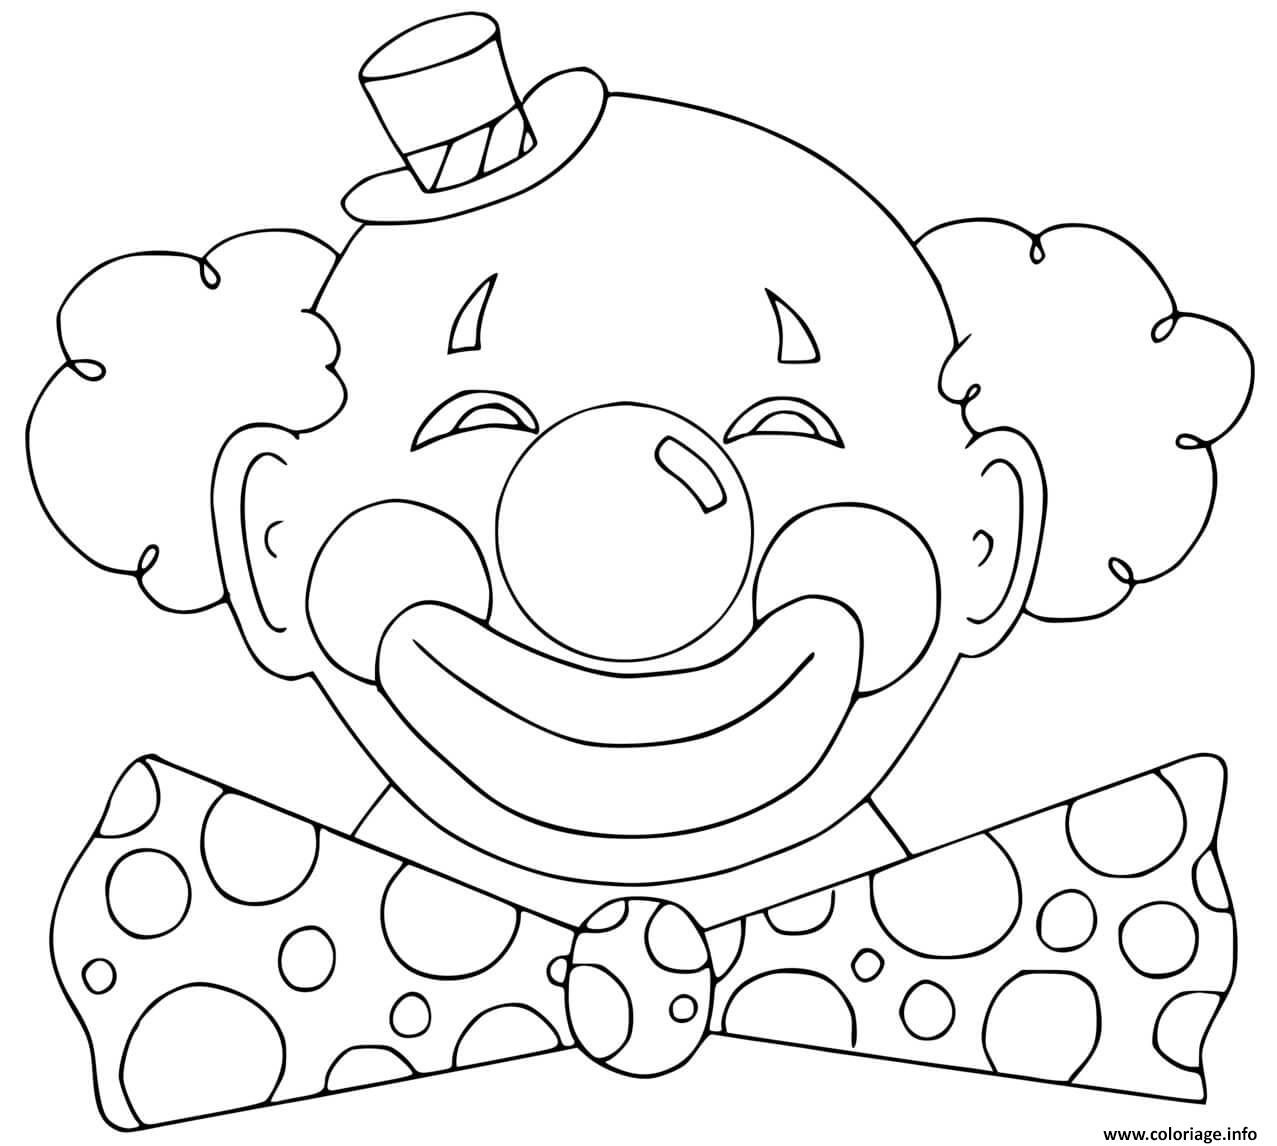 Шаблон клоуна для аппликации для детей. Клоун раскраска. Лицо клоуна раскраска. Веселый клоун раскраска. Клоун раскраска для детей.